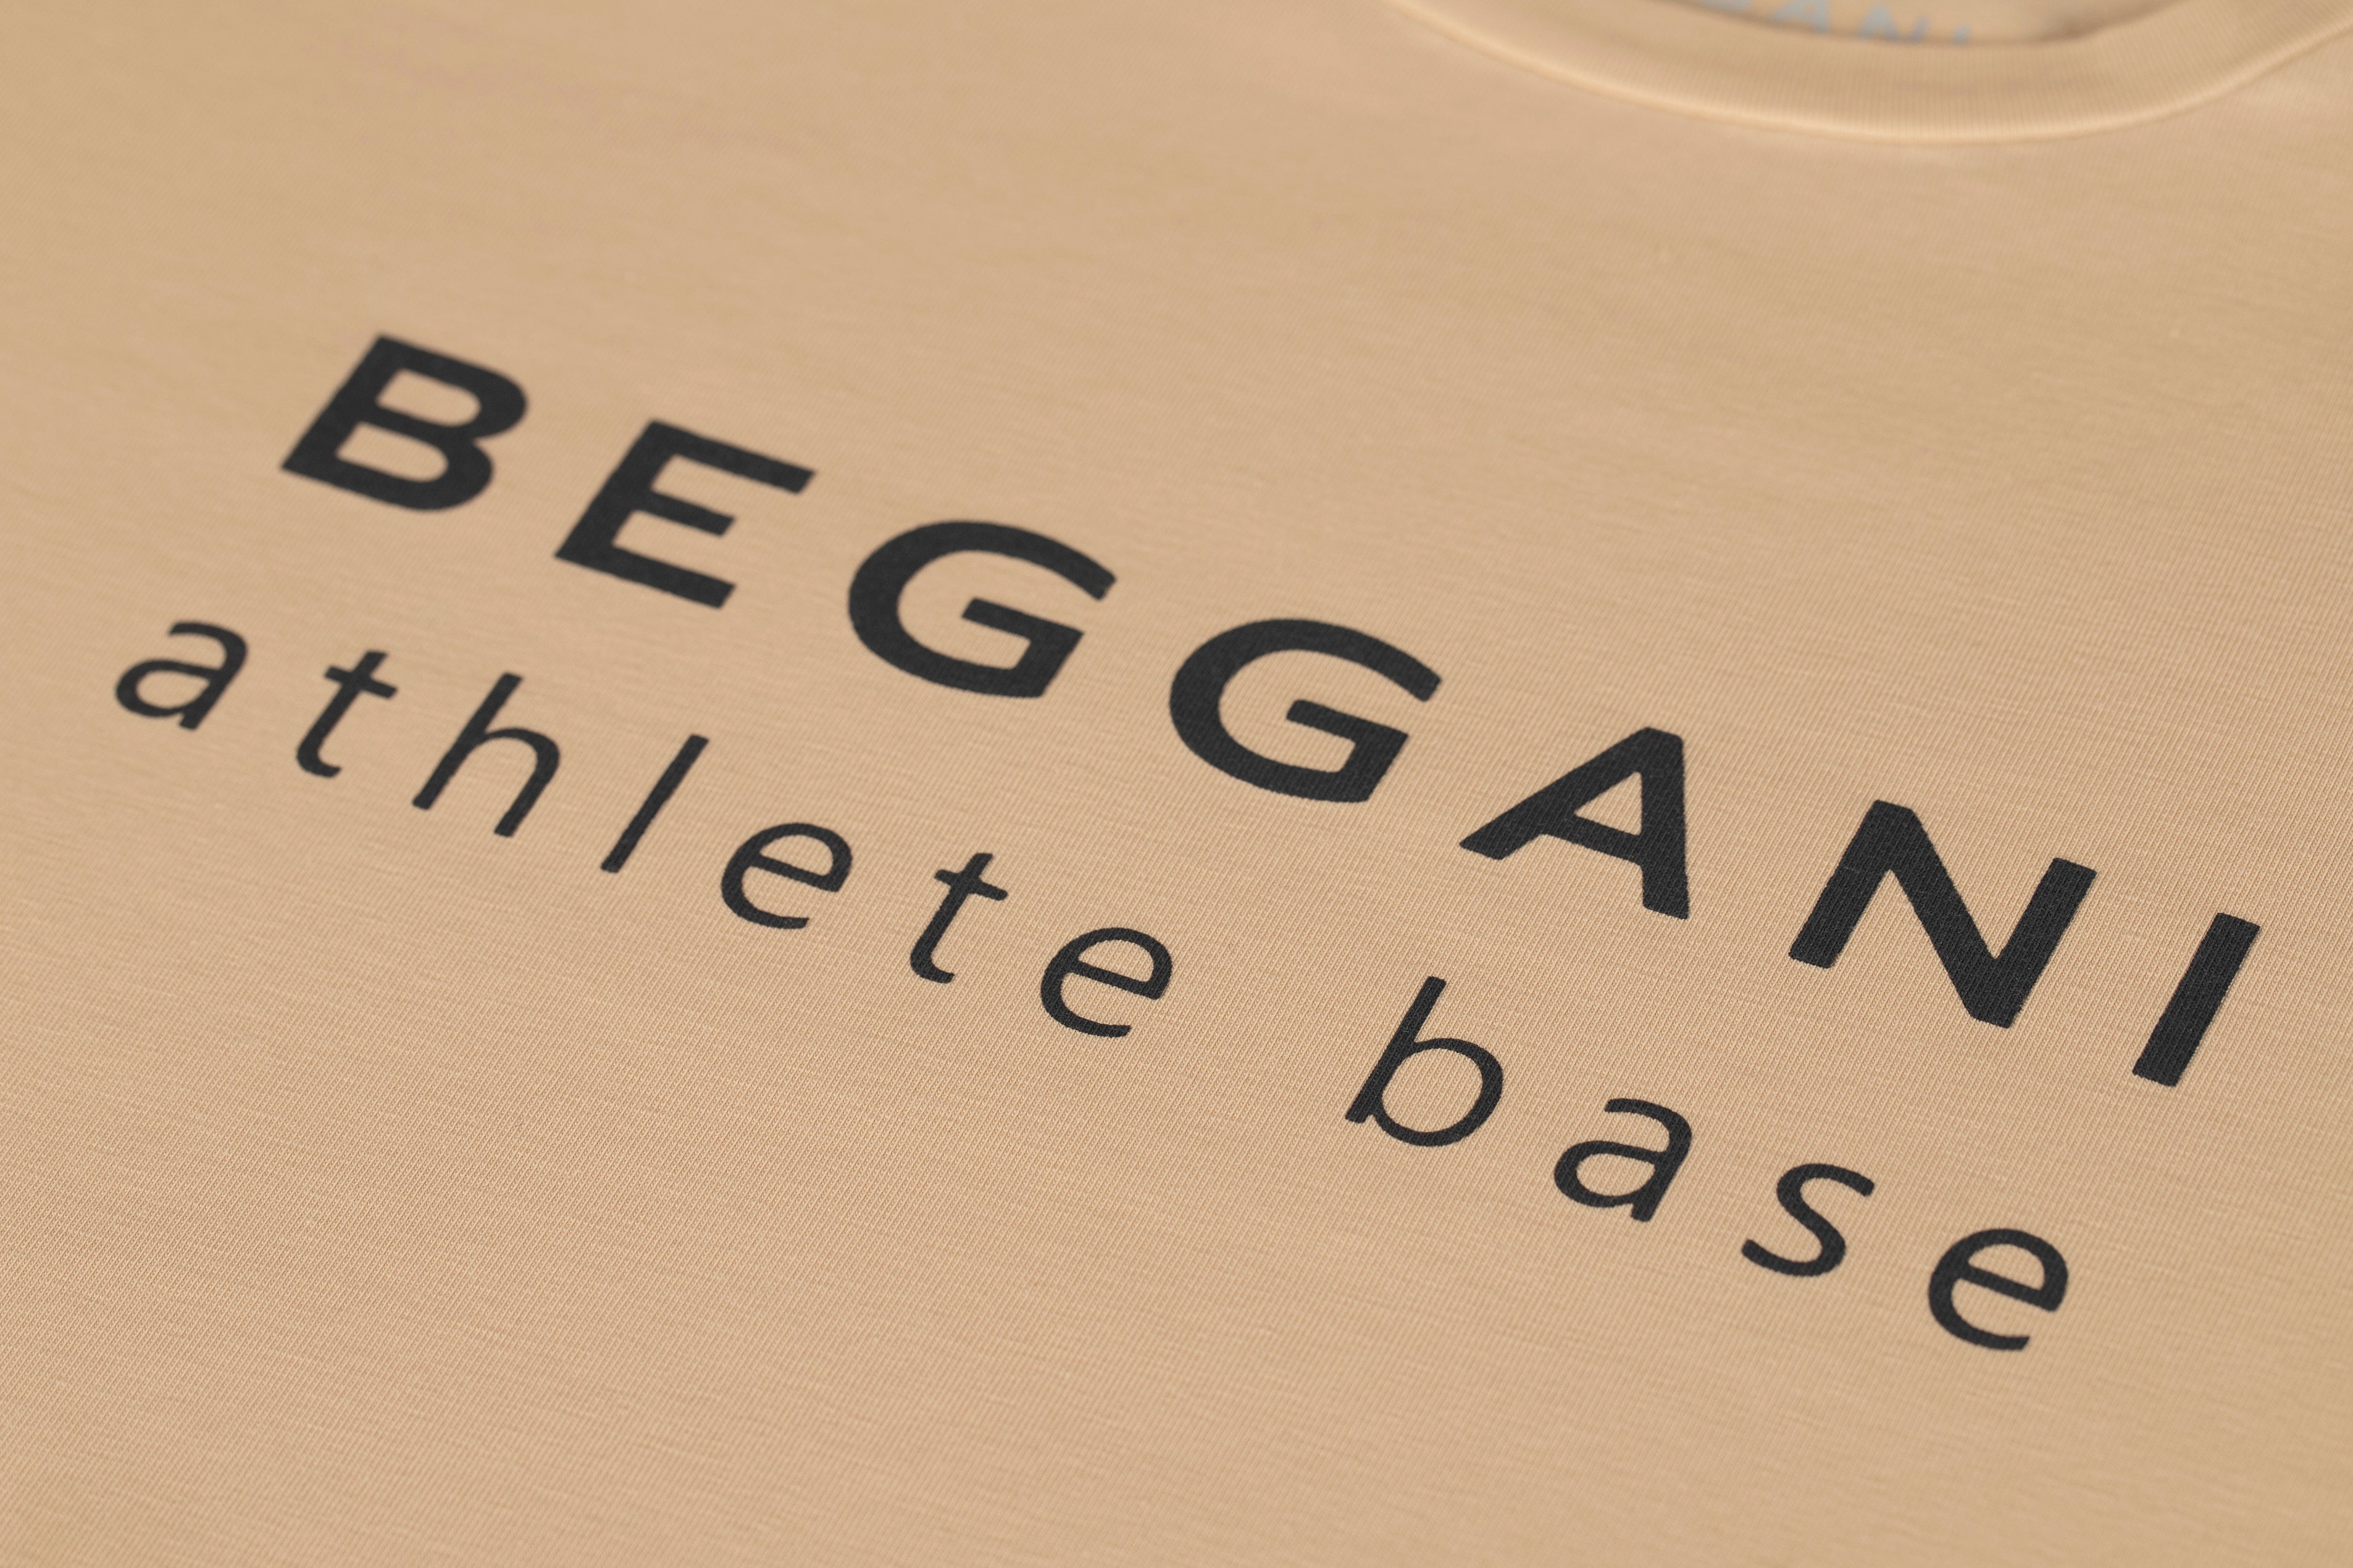 Long-sleeved T-shirt BEGGANI athlete base